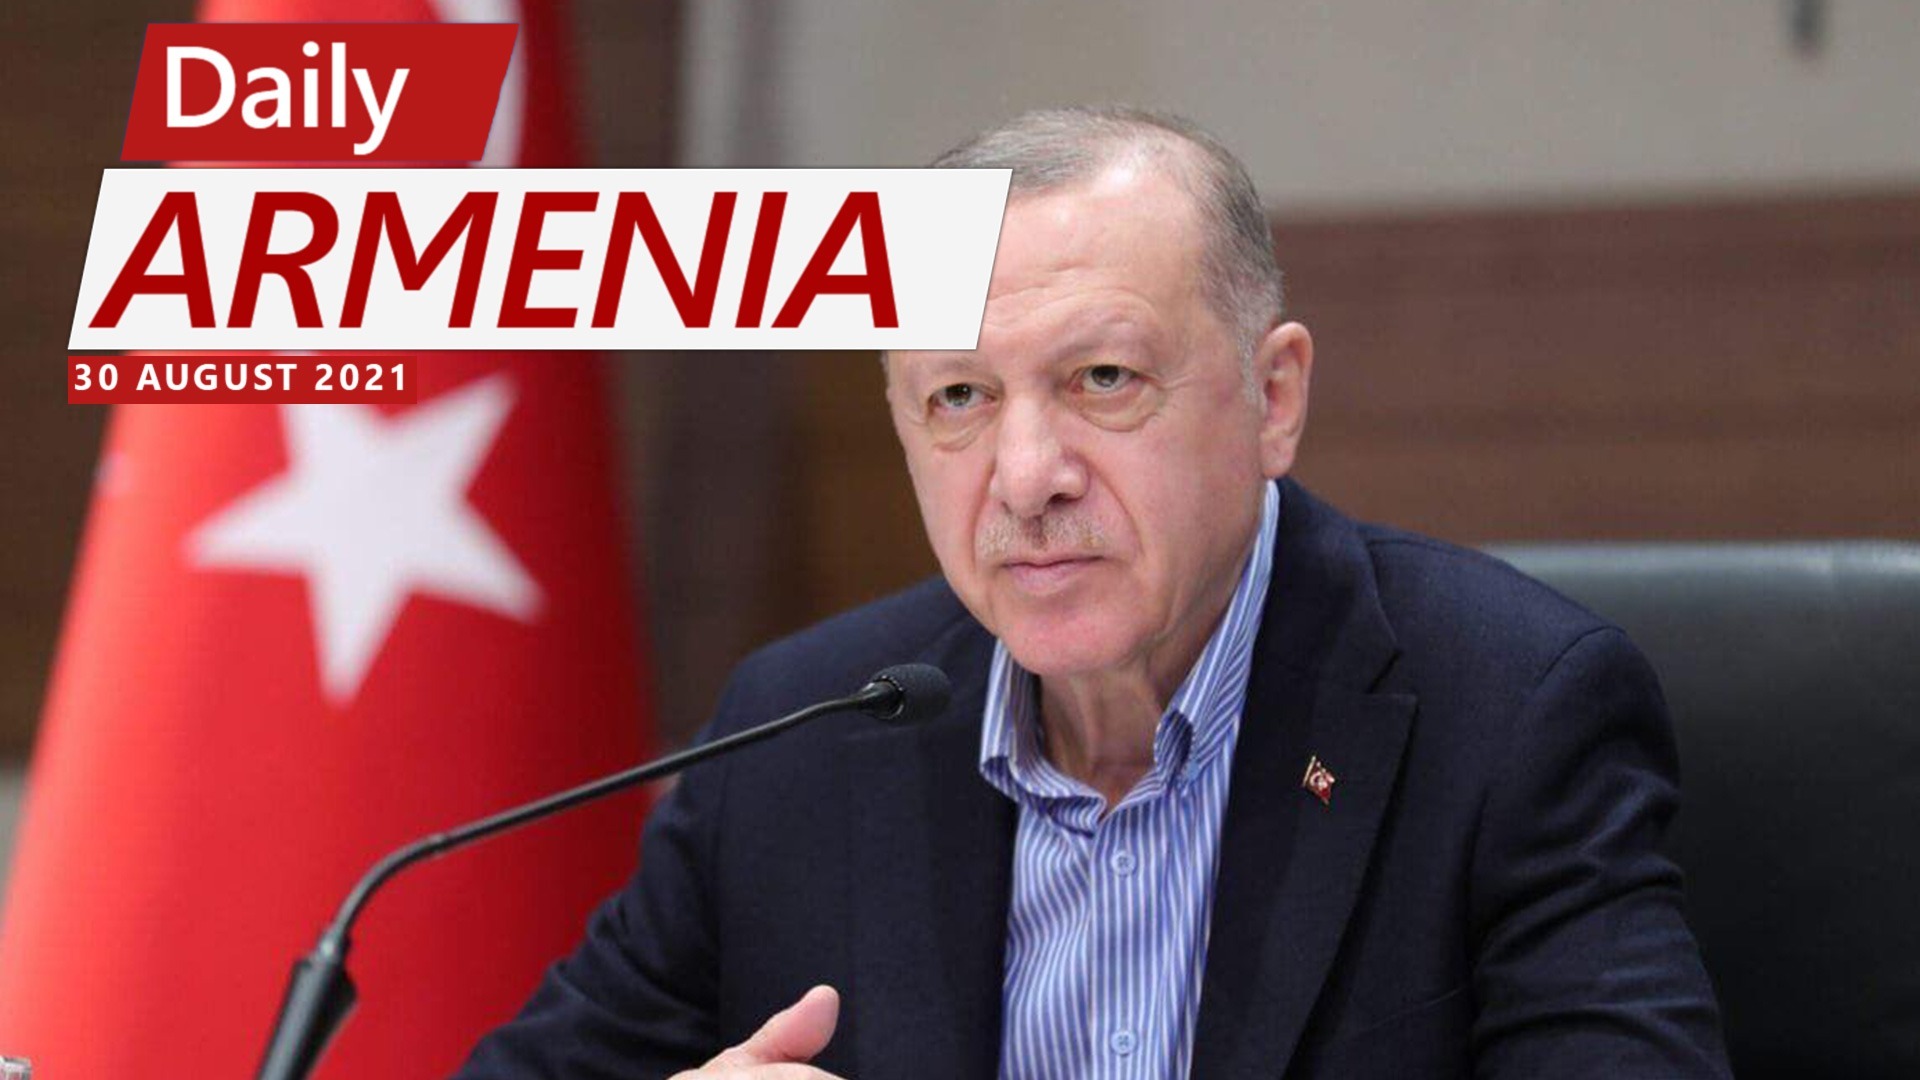 Turkey ready to normalize relations with Armenia, says Erdogan